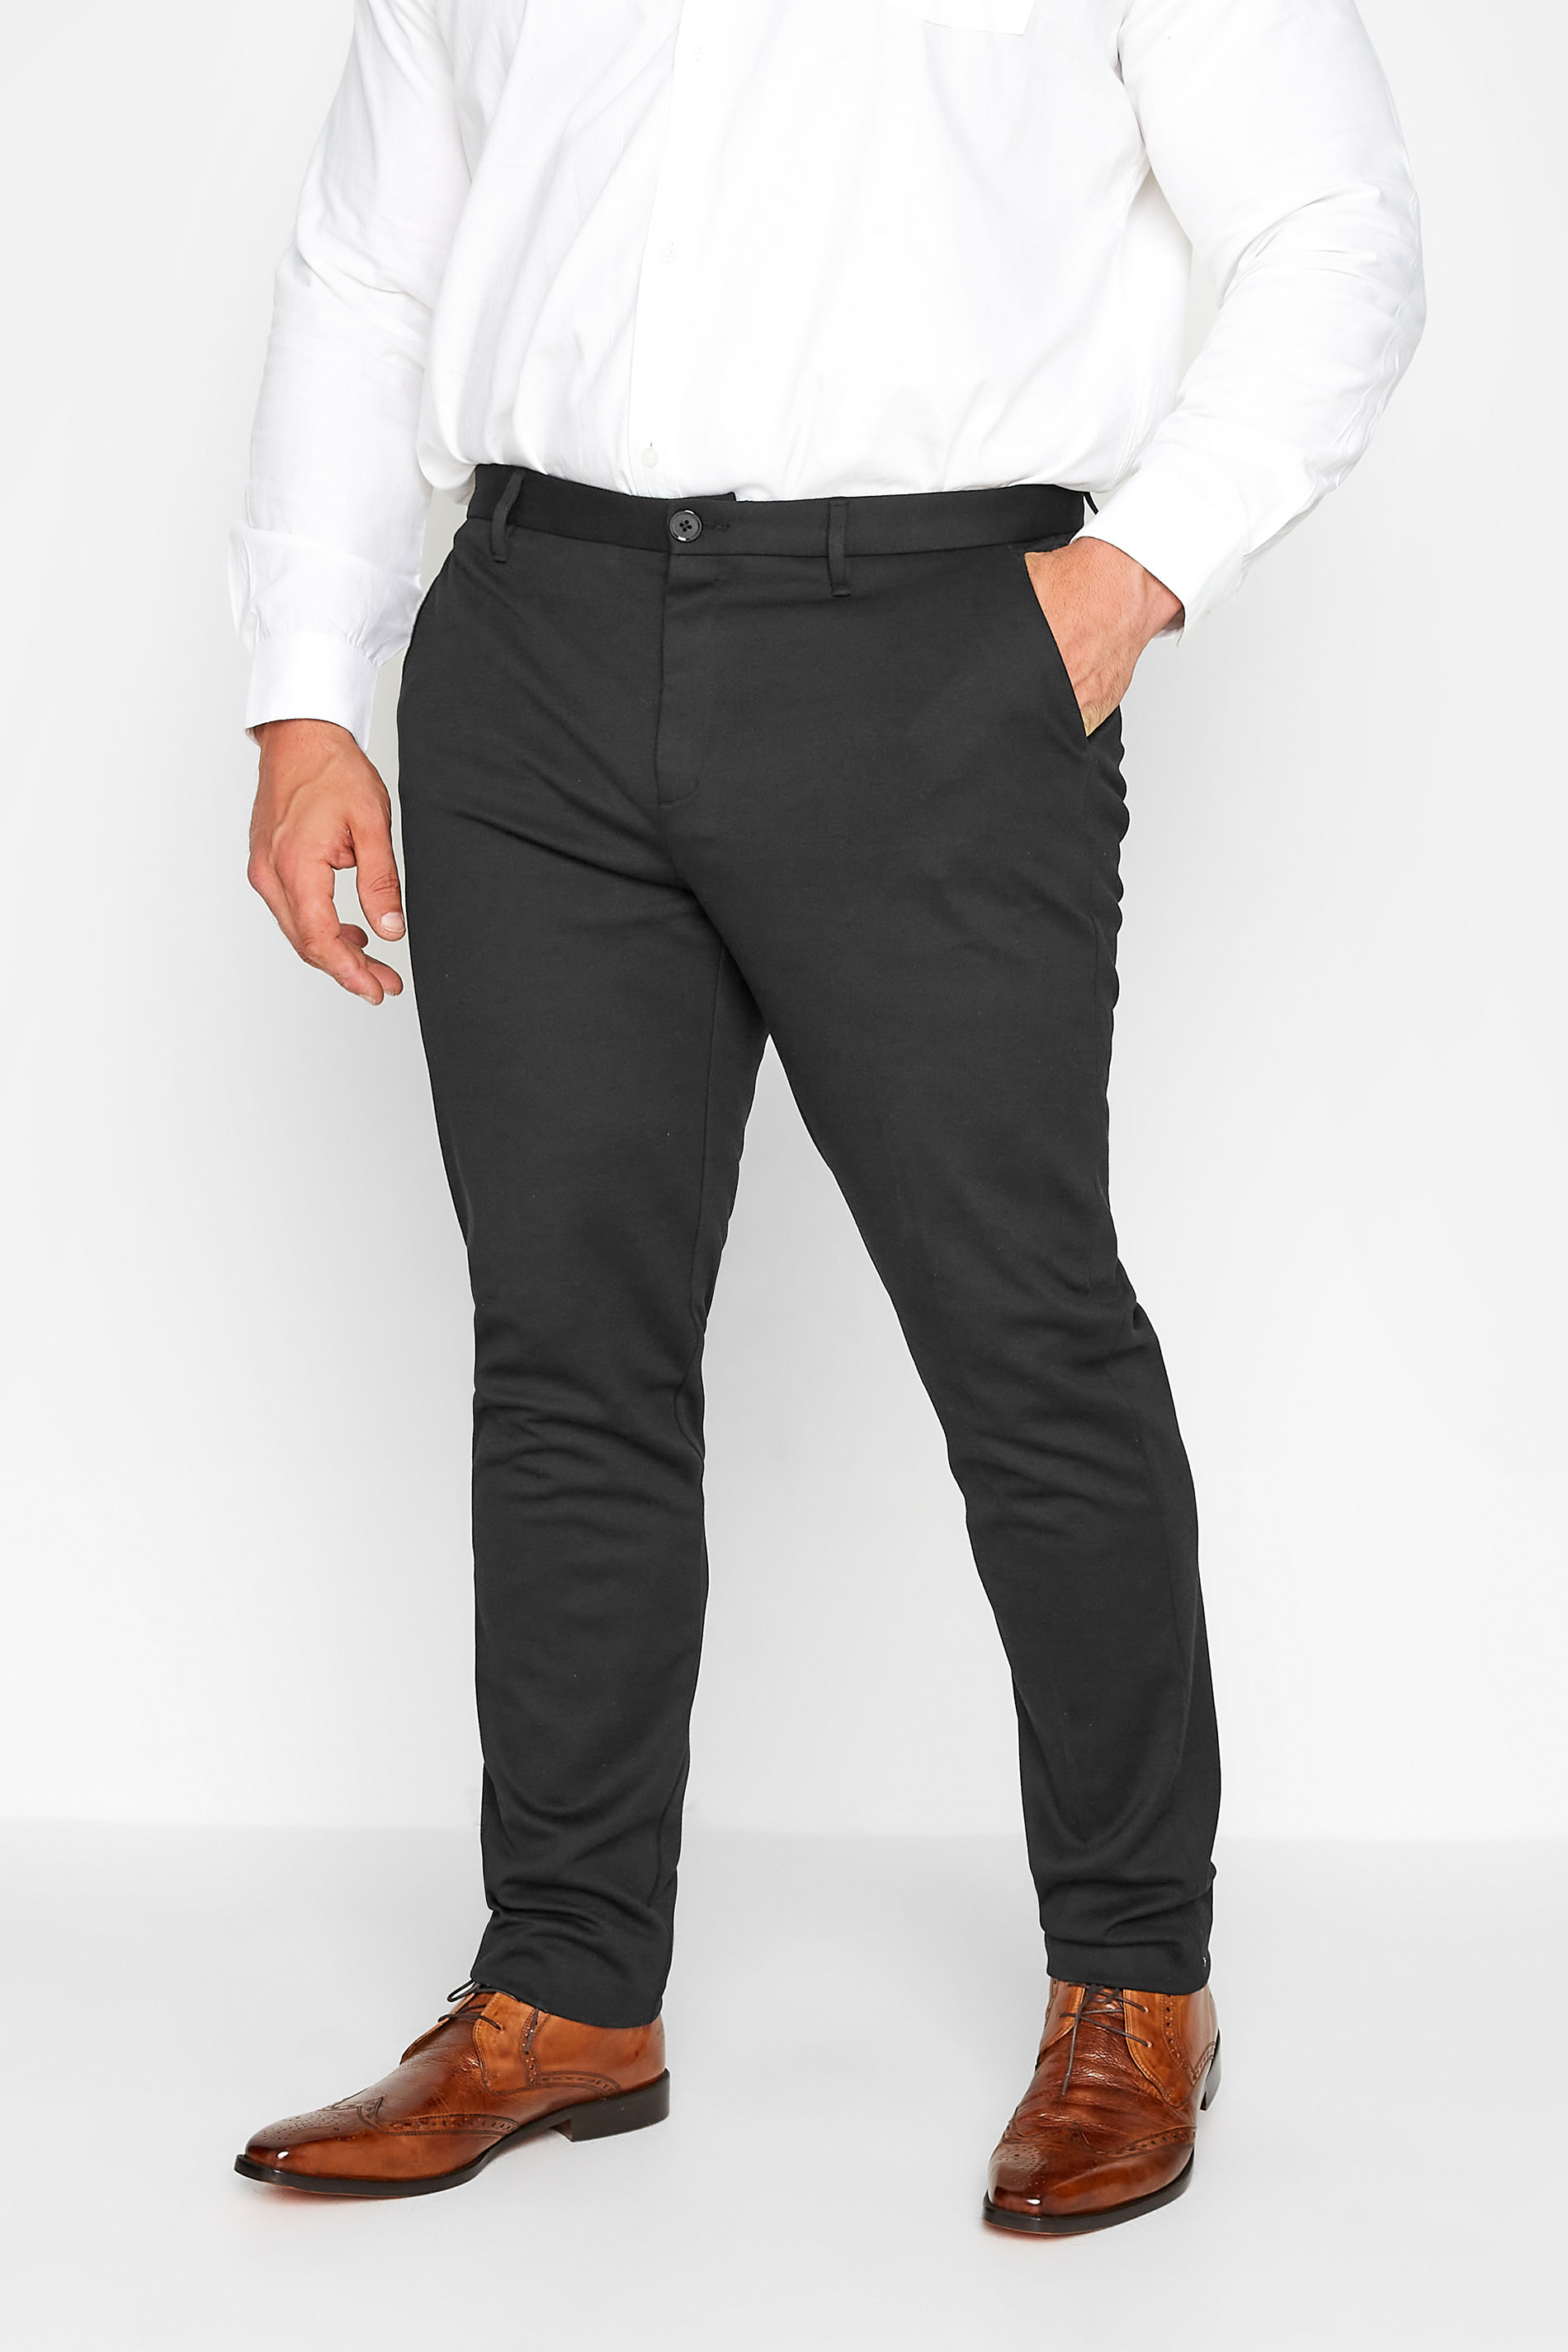 BadRhino Black Stretch Trousers | BadRhino 1